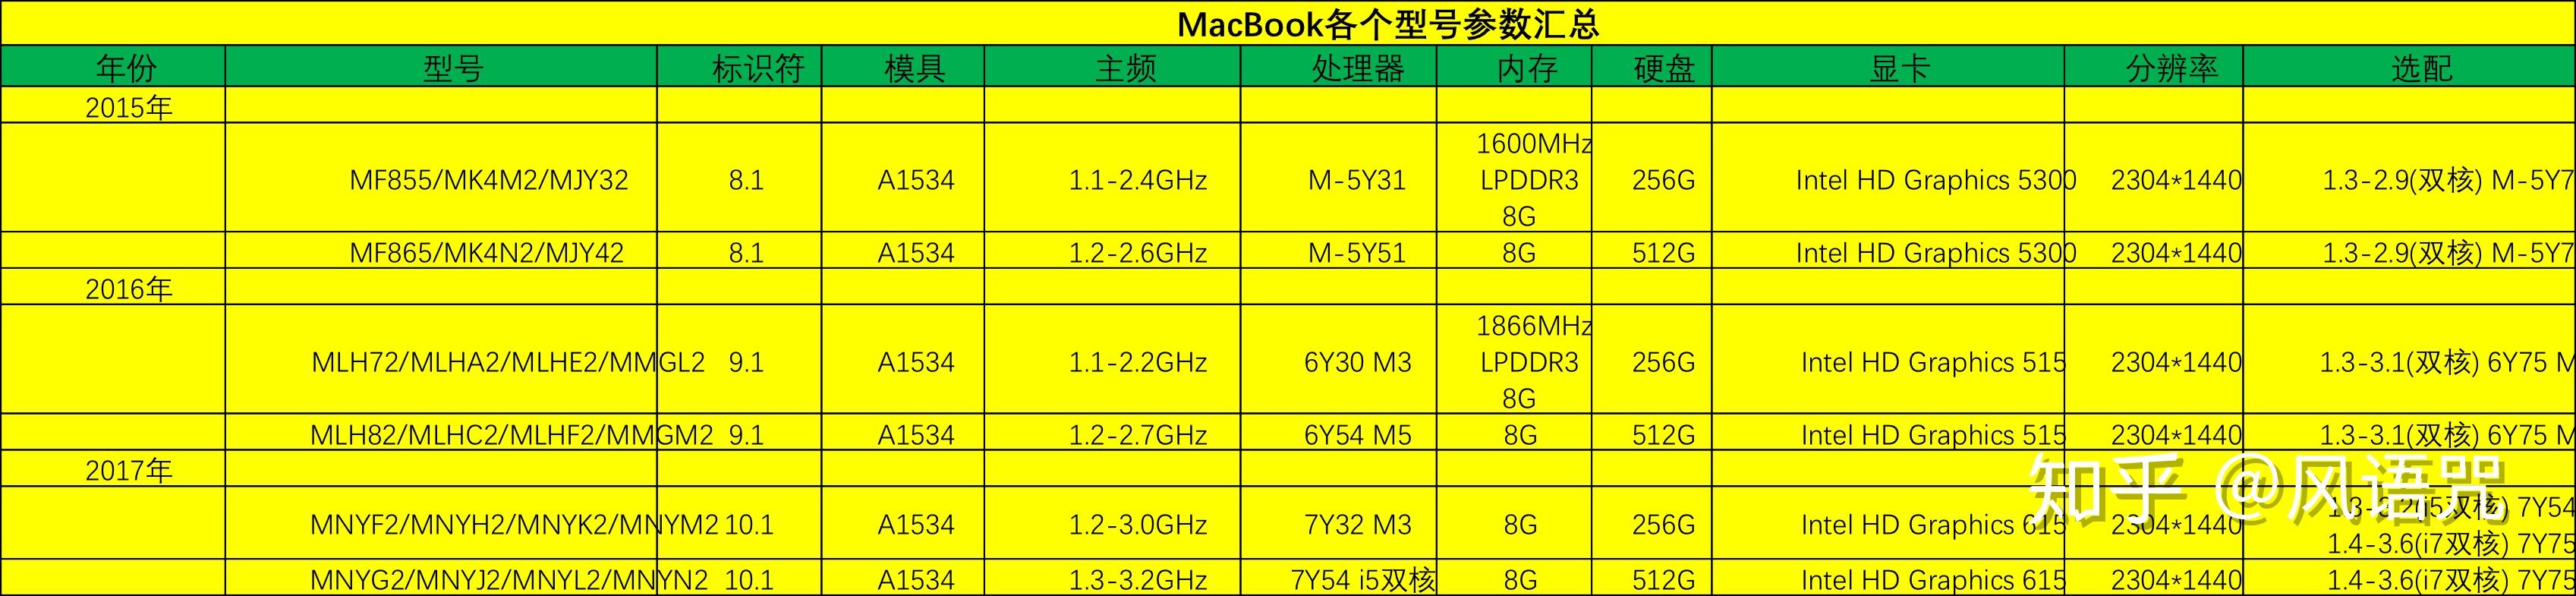 macbook全系列型号参数汇总 